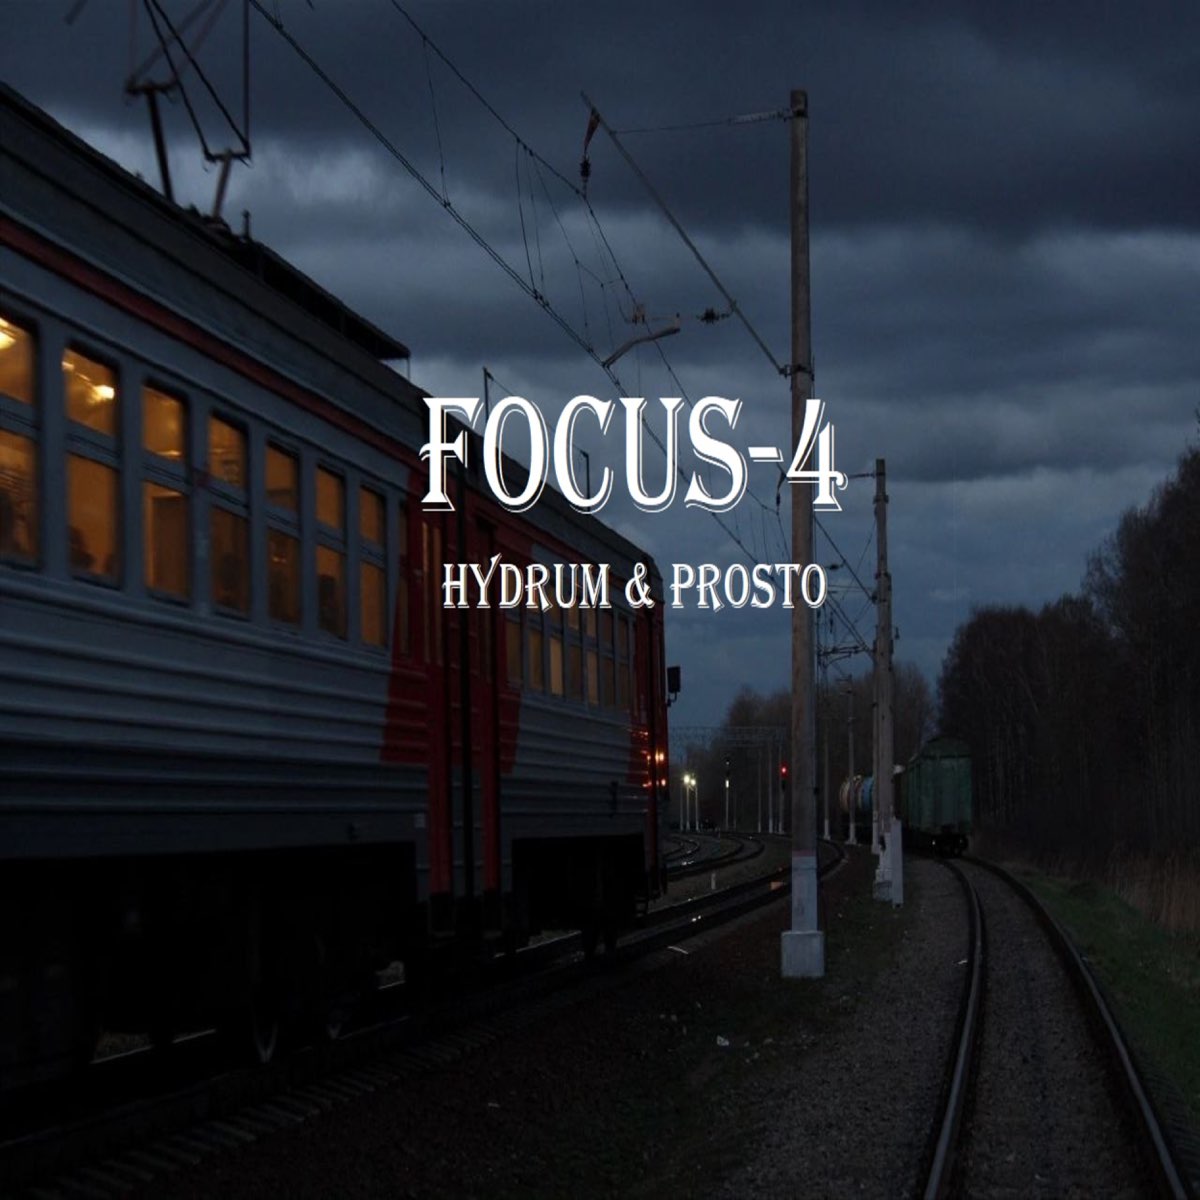 Focus-4 - Single by Hydrum & Prosto on Apple Music